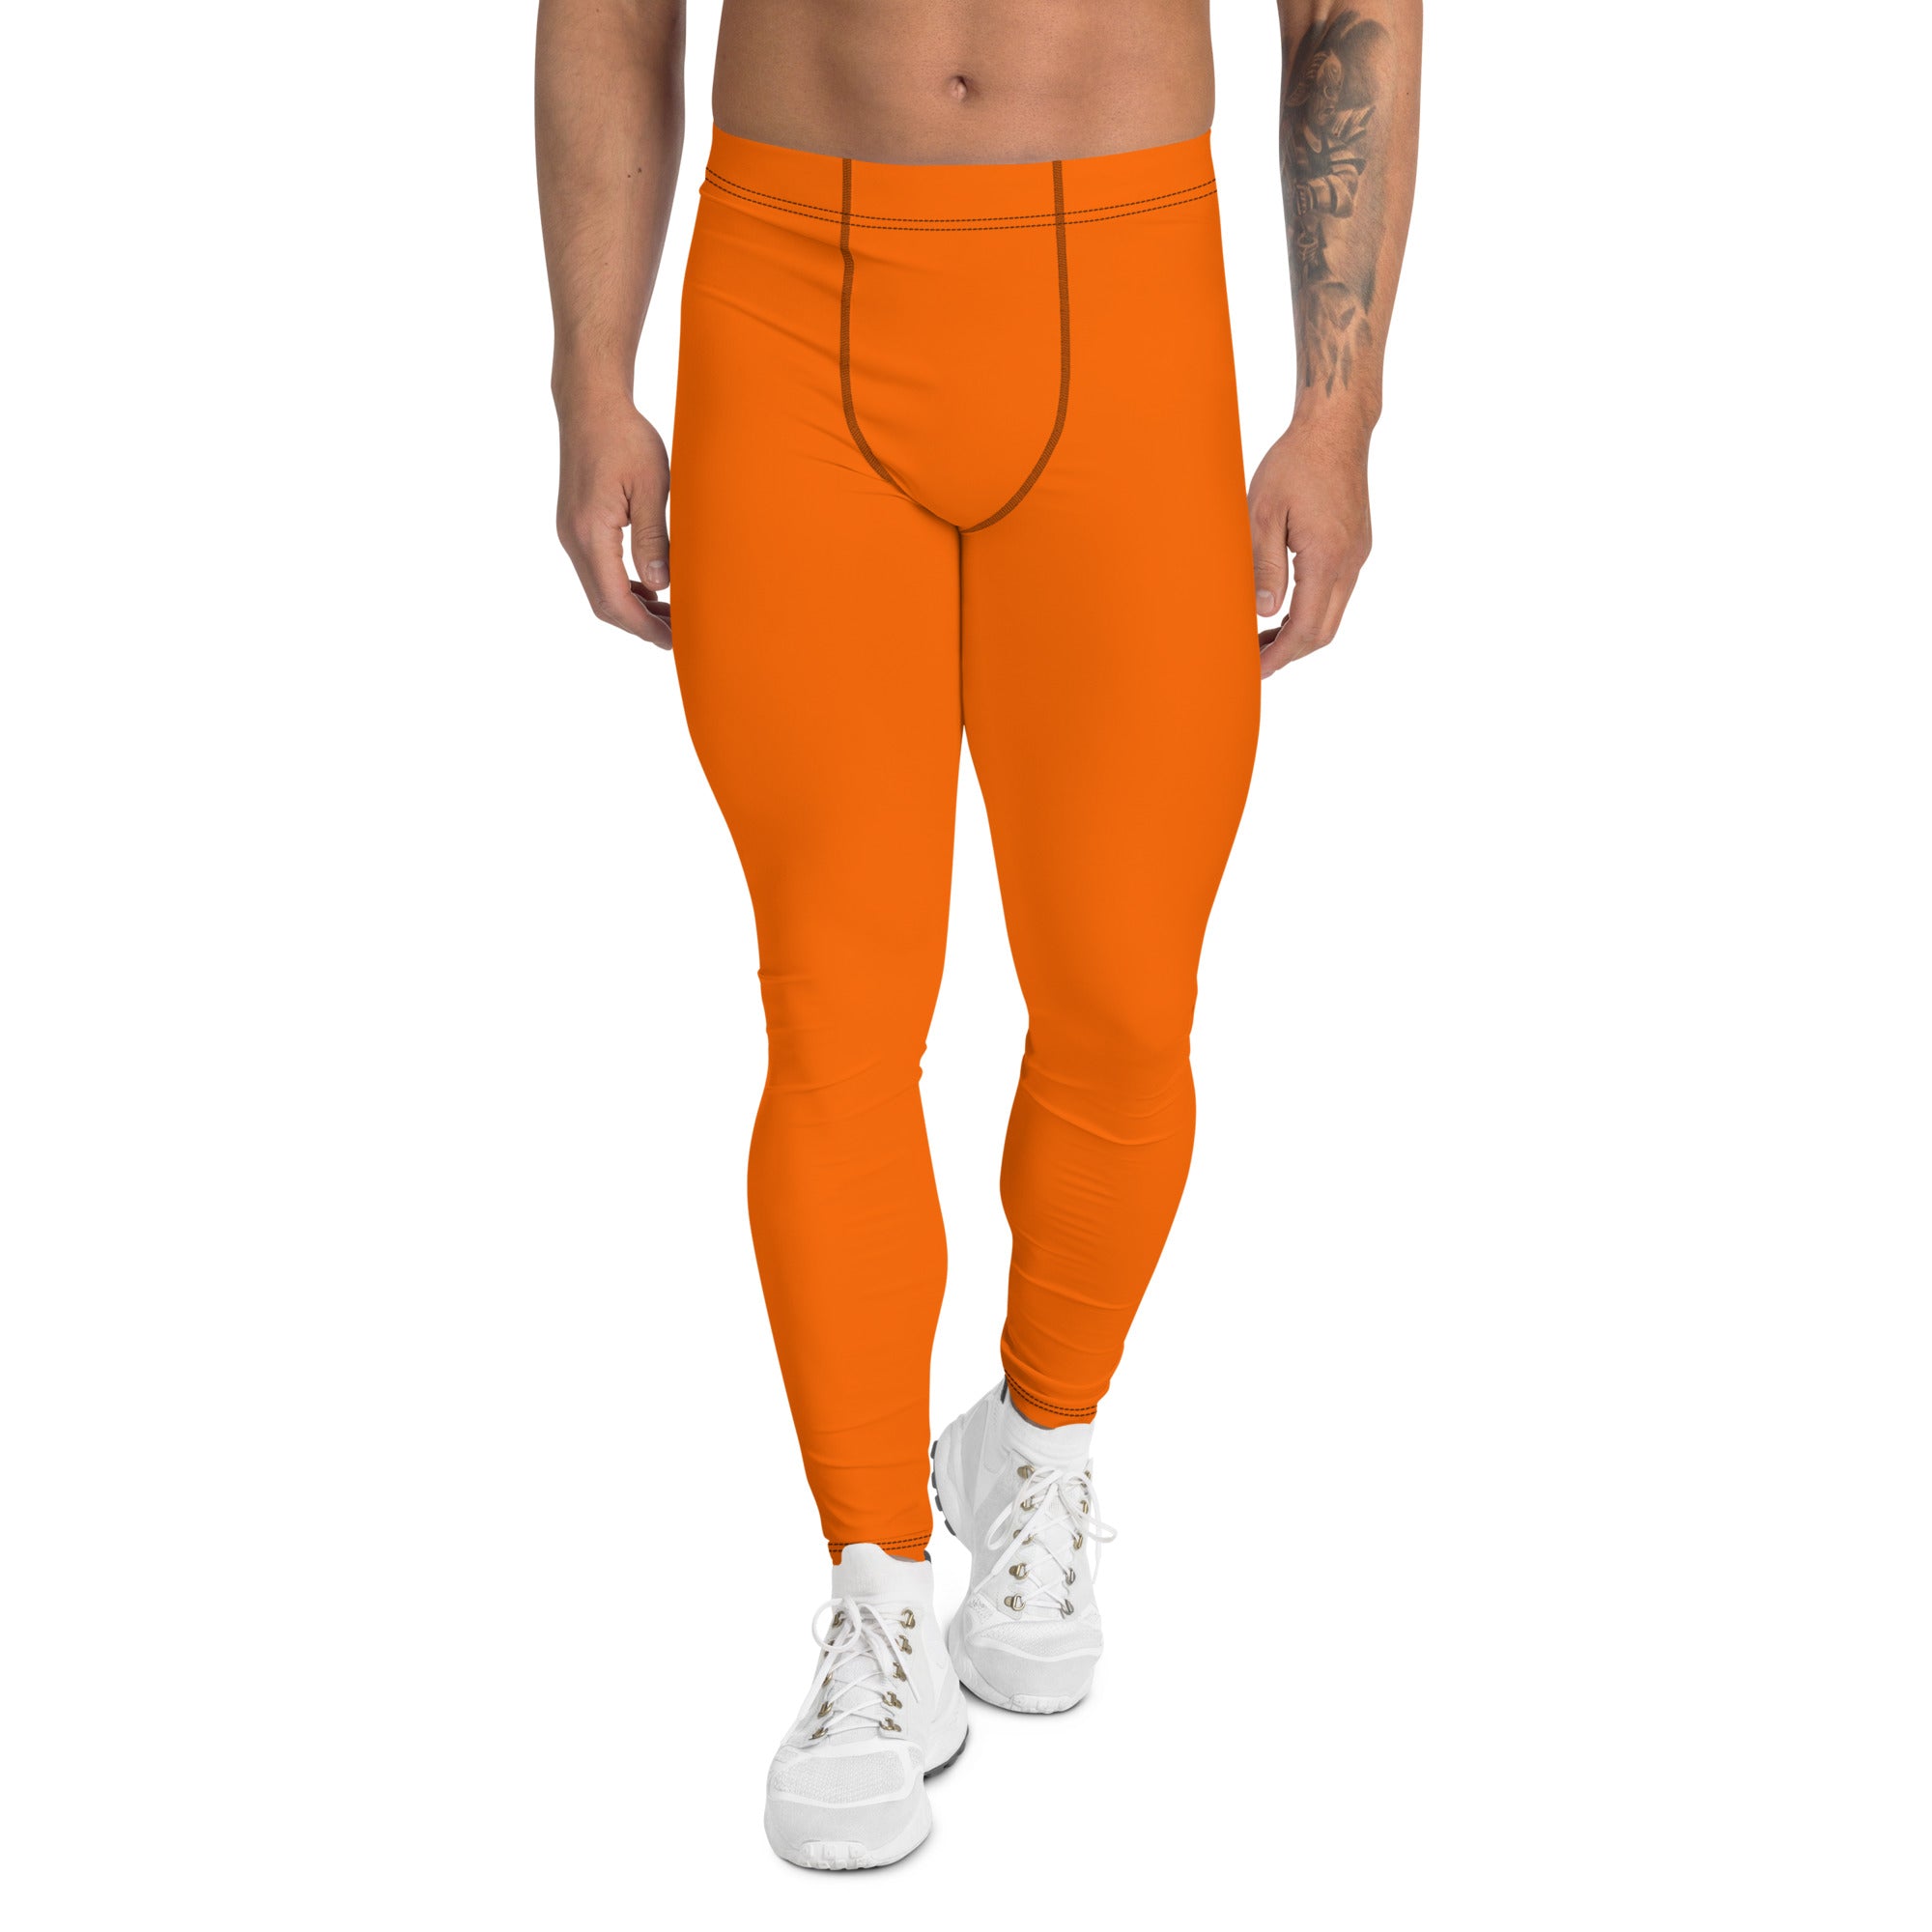 Neon Orange Solid Men's Leggings